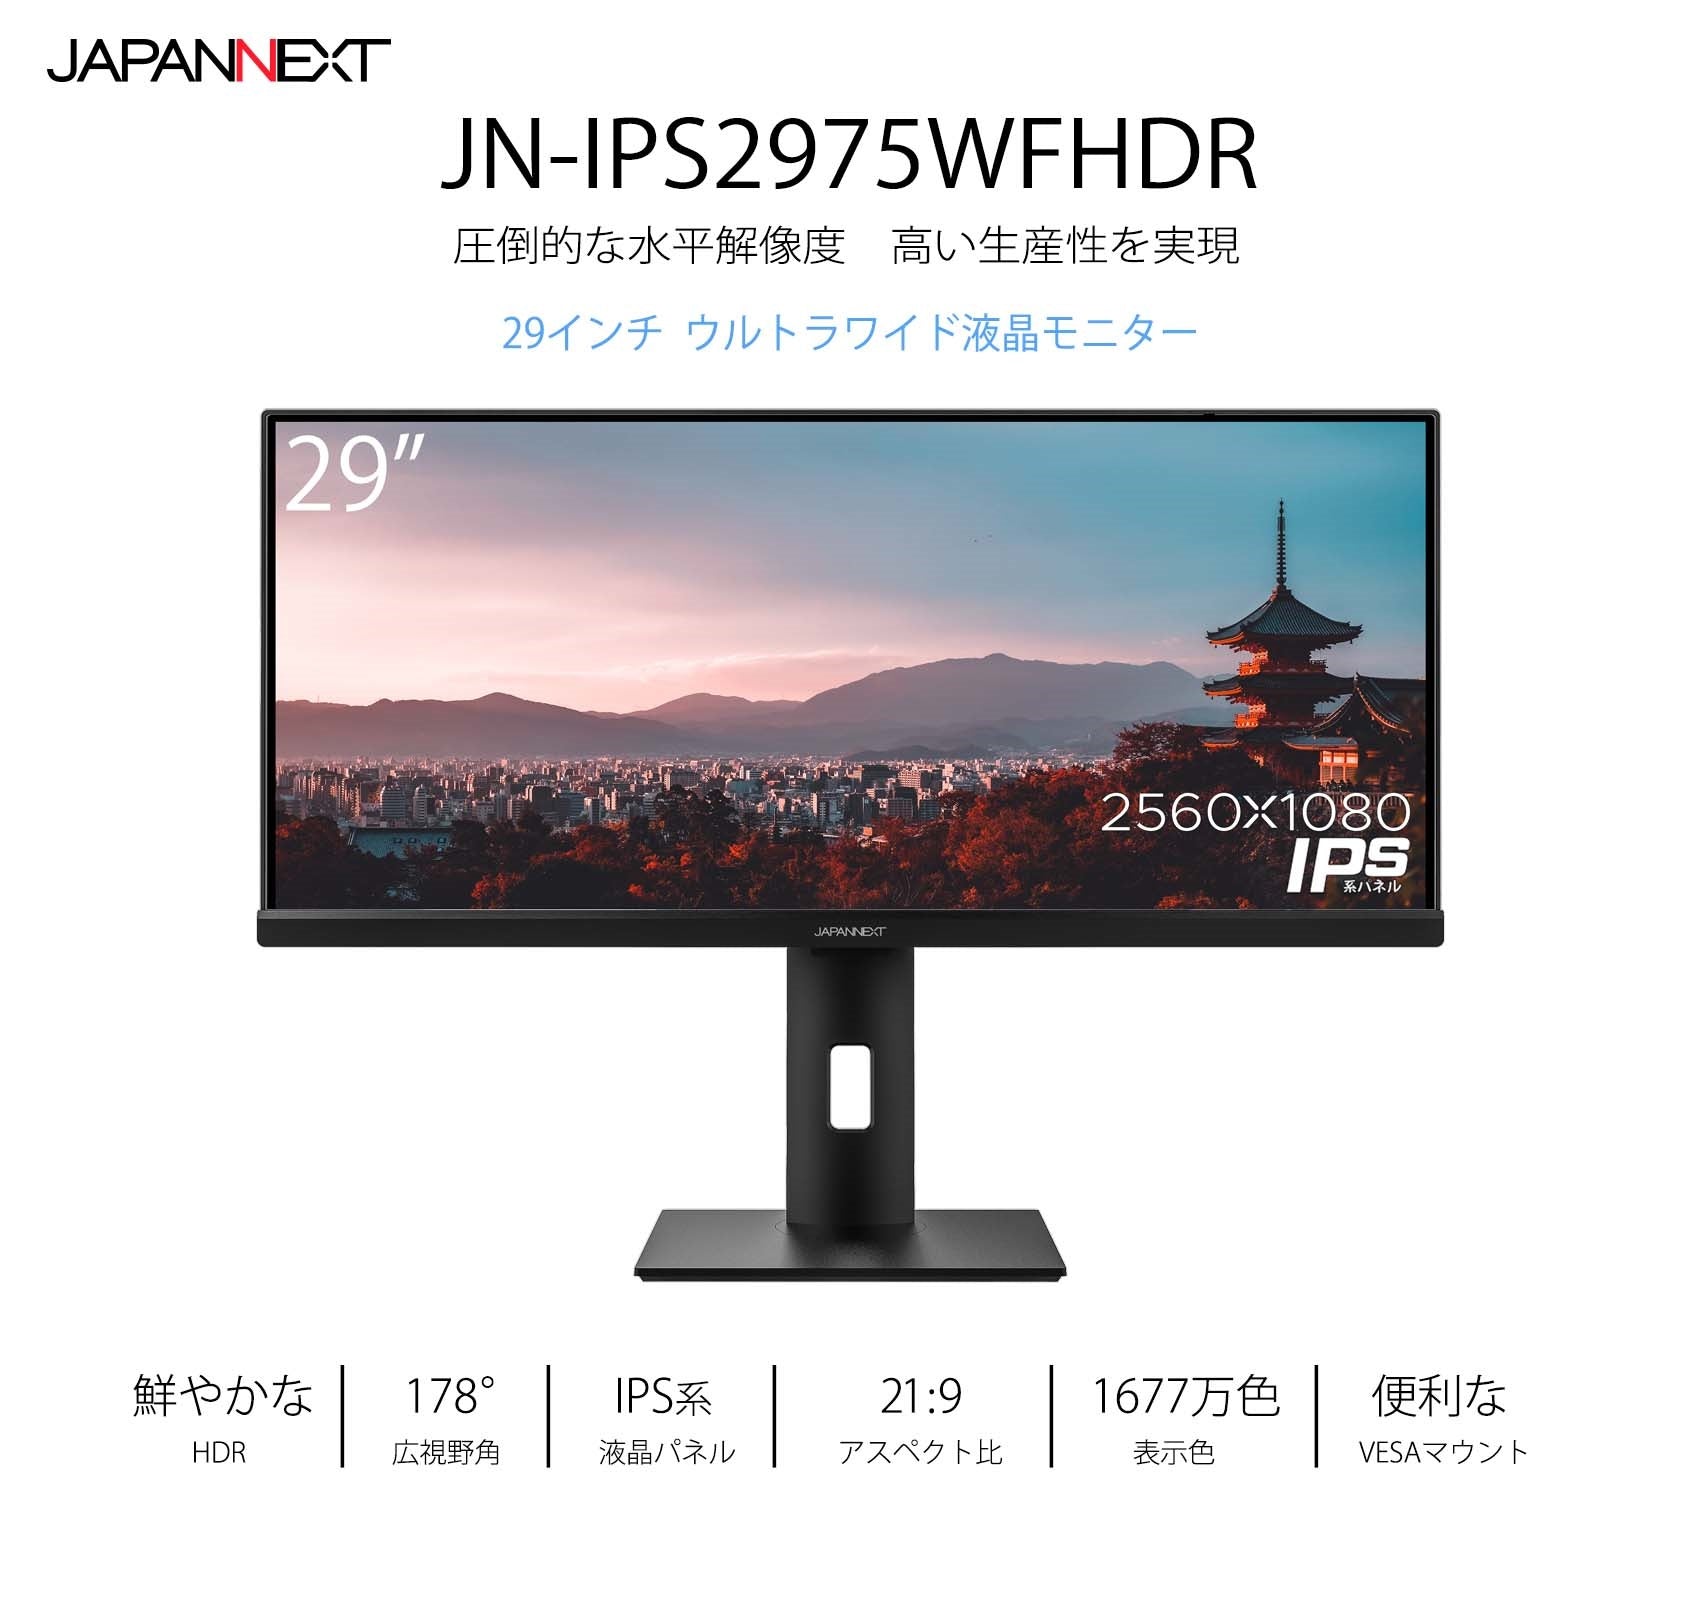 JAPANNEXT 29インチ ワイドFHD(2560 x 1080) 液晶モニター JN-IPS2975WFHDR HDMI DP